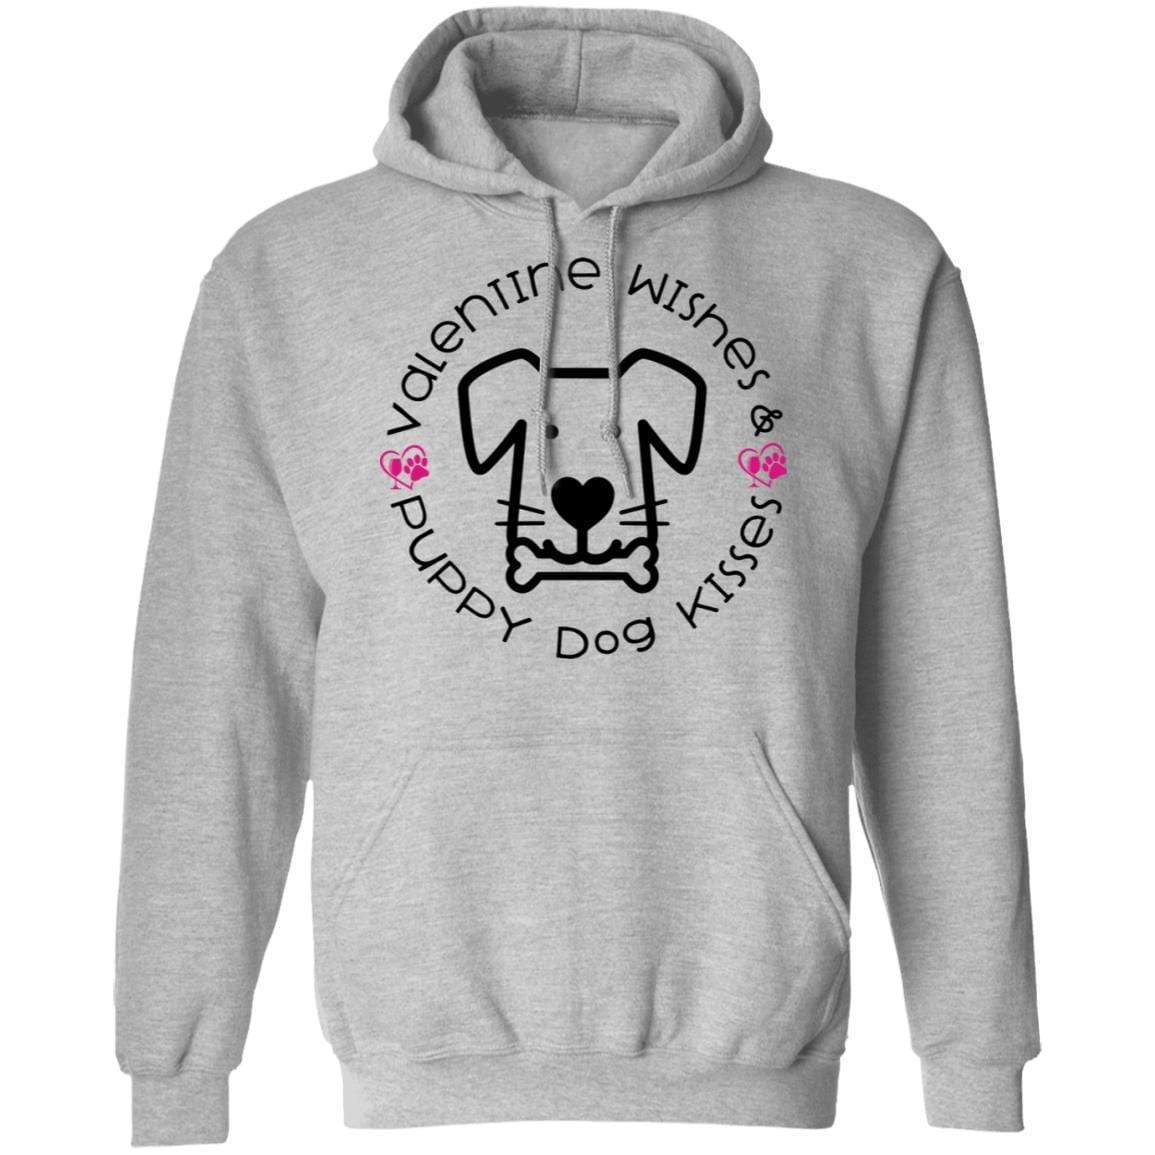 Sweatshirts Sport Grey / S Winey Bitches Co Valentine Wishes and Puppy Dog Kisses" (Dog) Pullover Hoodie 8 oz. WineyBitchesCo